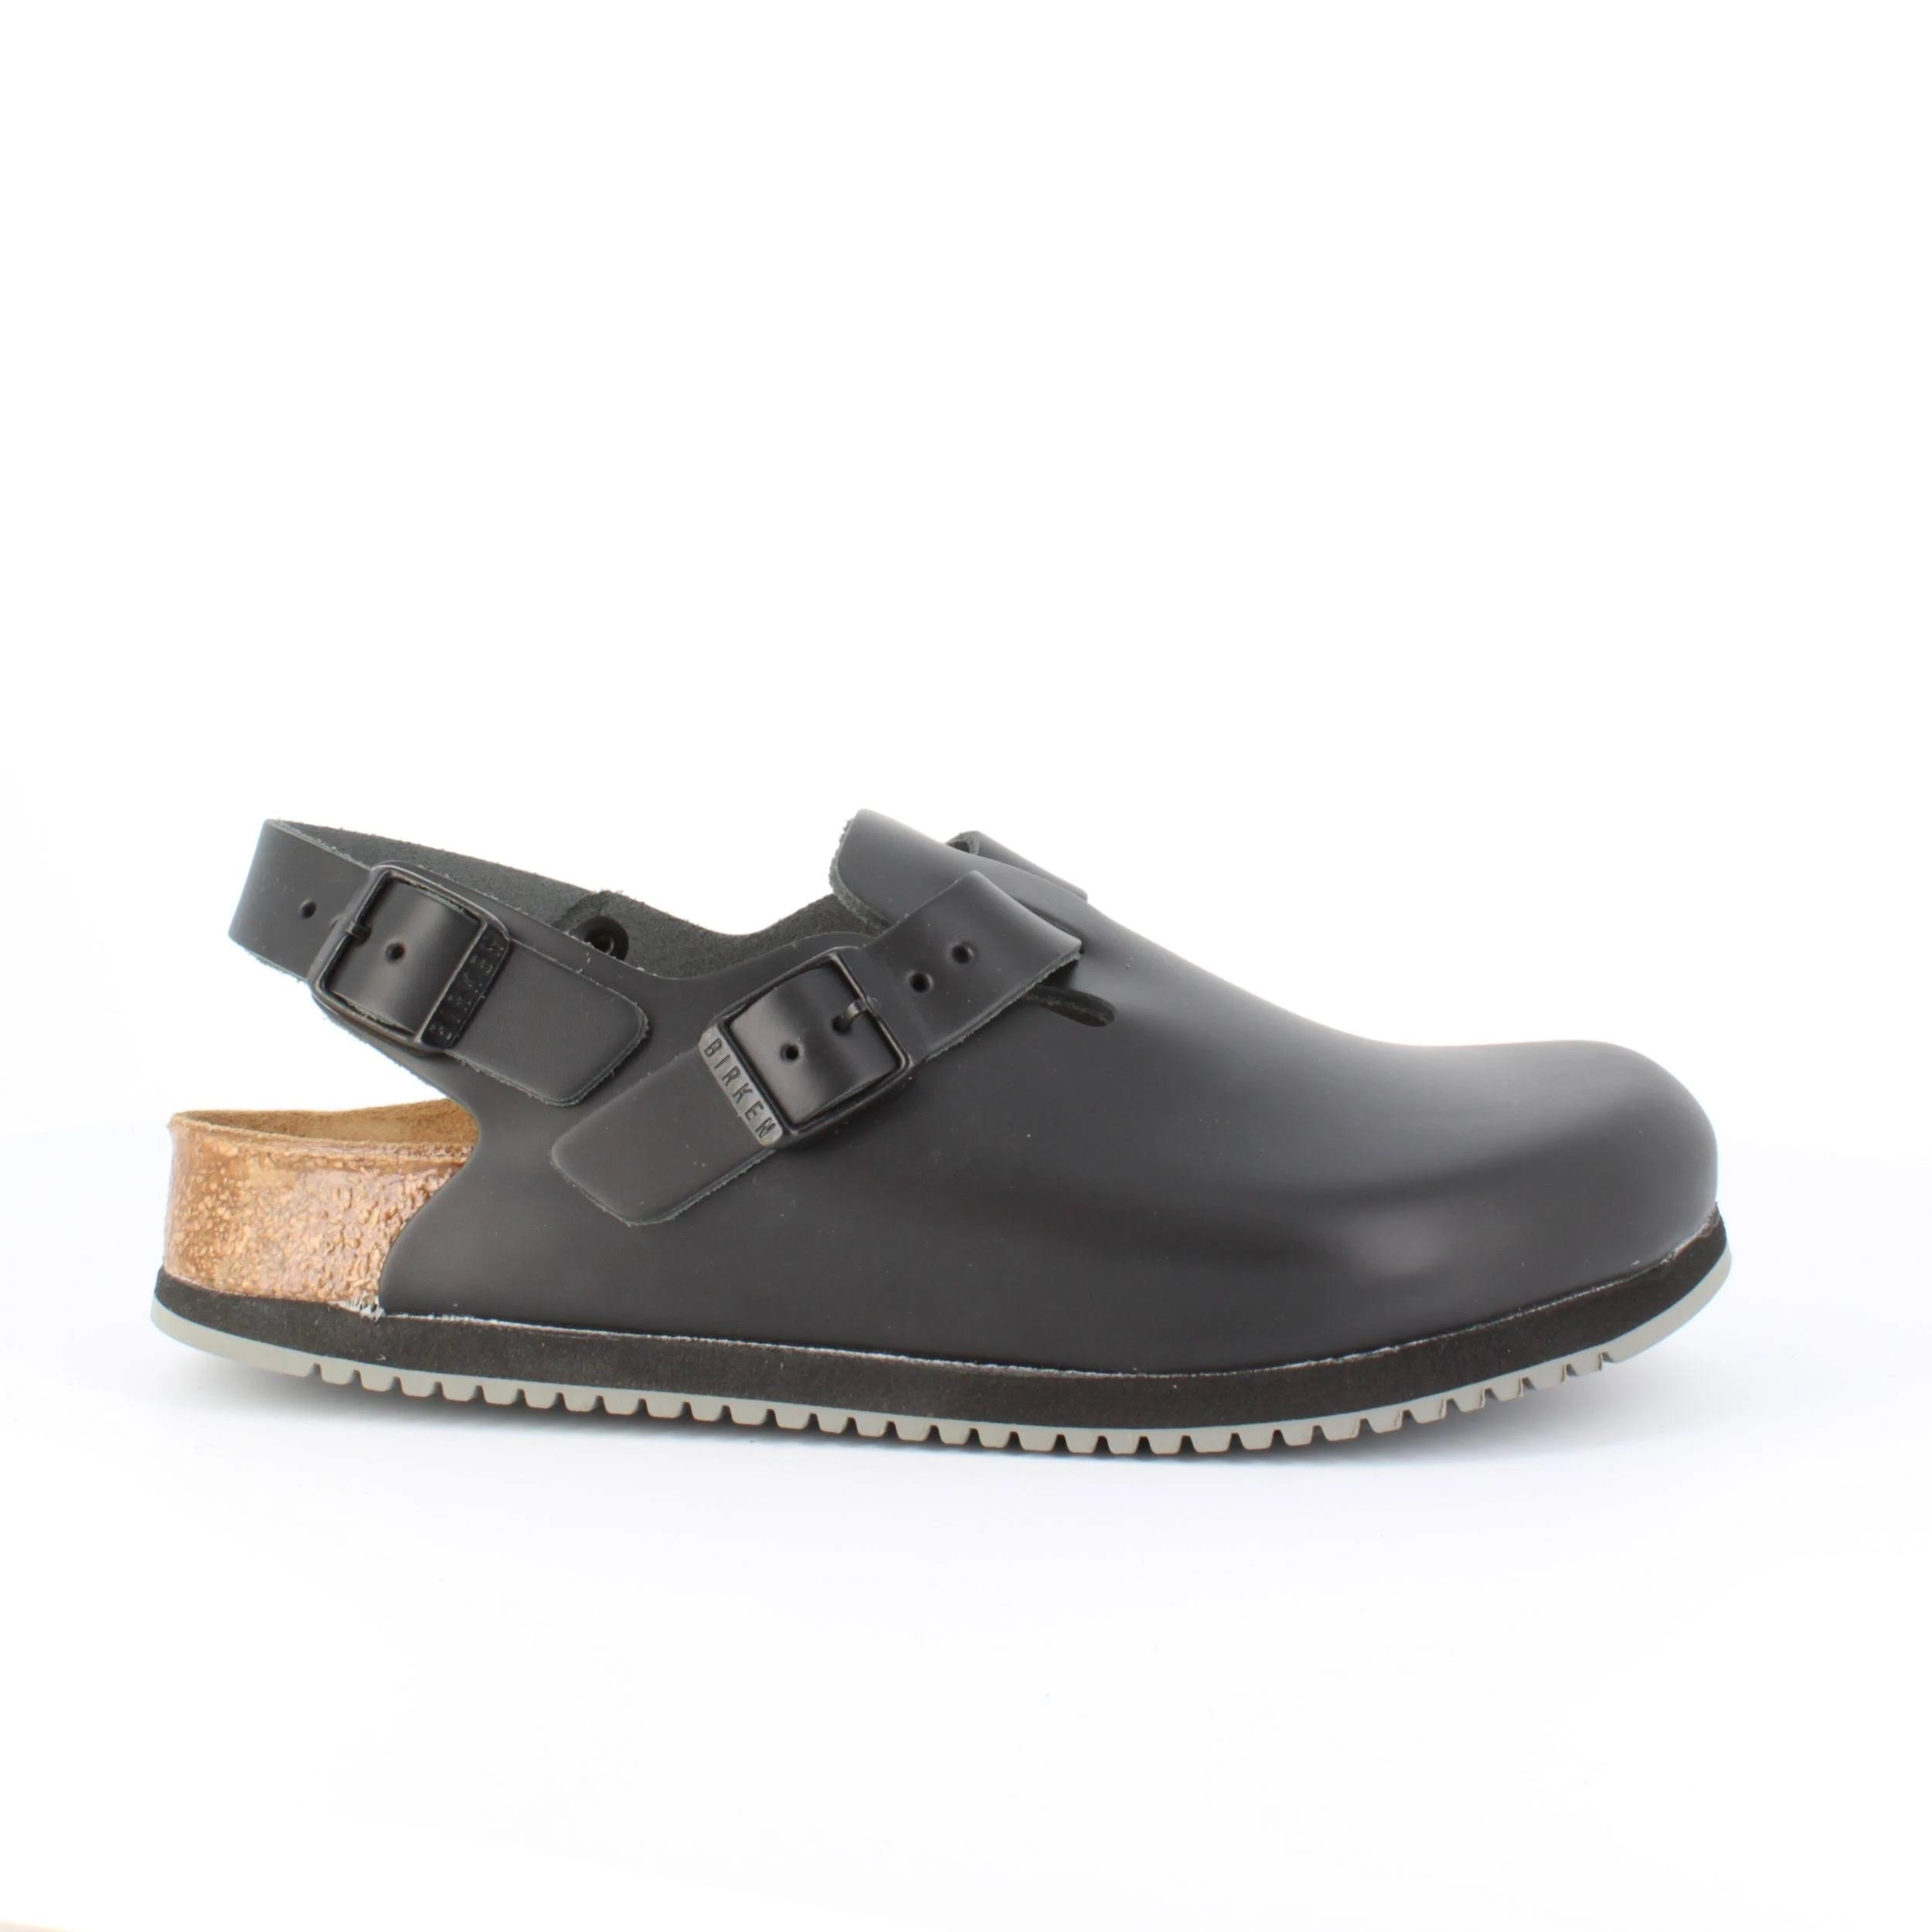 Birkenstock Tokio Super Grip Leather Sandals: Non-Slip Comfort and Firm Step | Image